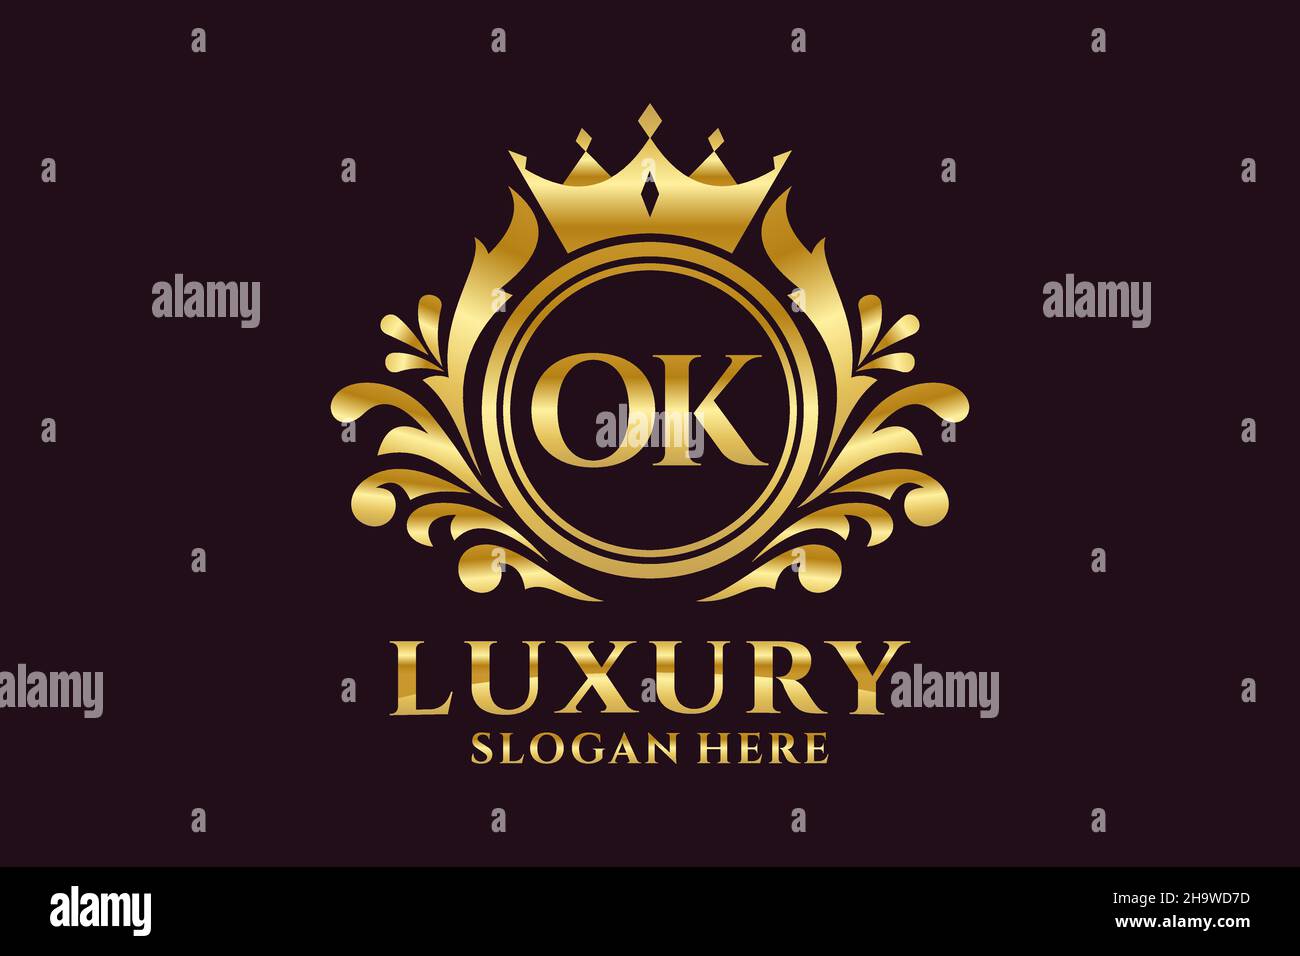 OK Buchstabe Royal Luxury Logo Vorlage in Vektorgrafik für luxuriöse Branding-Projekte und andere Vektorgrafik. Stock Vektor